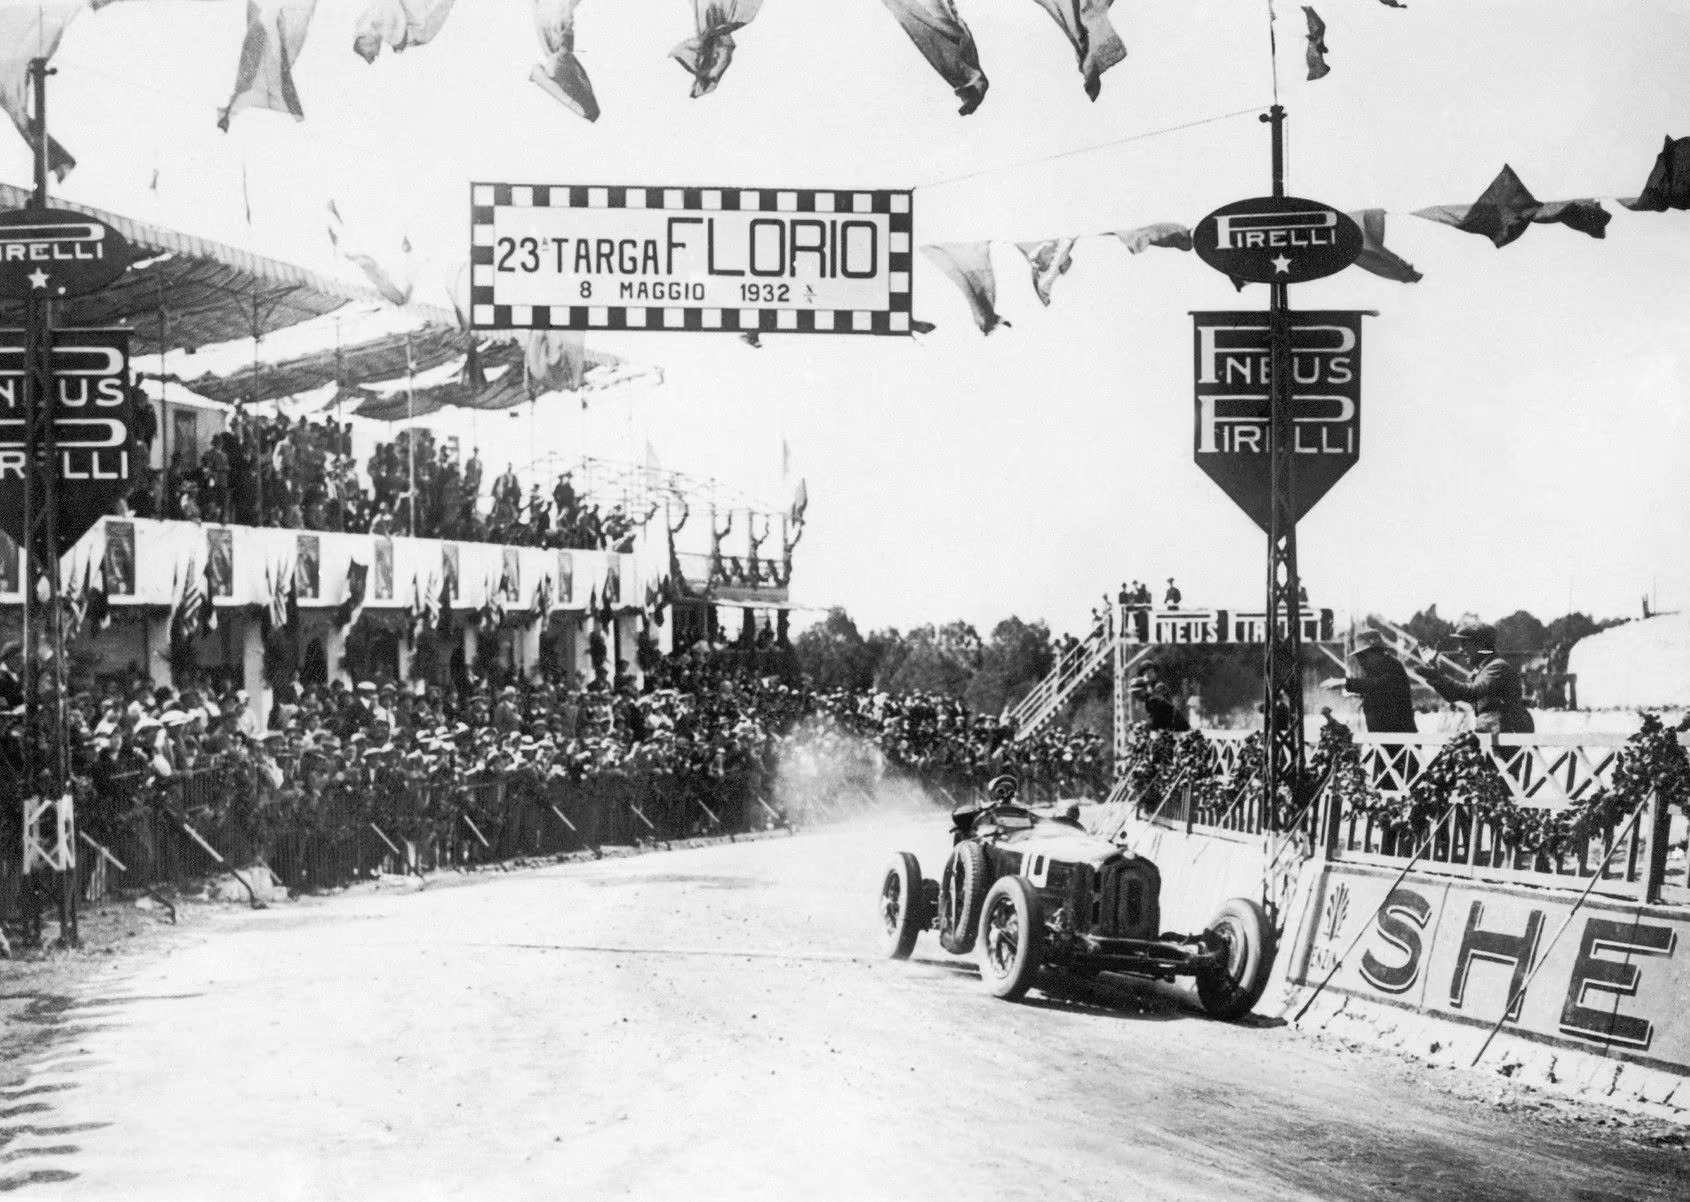 Targa Florio. A legendary race - 2